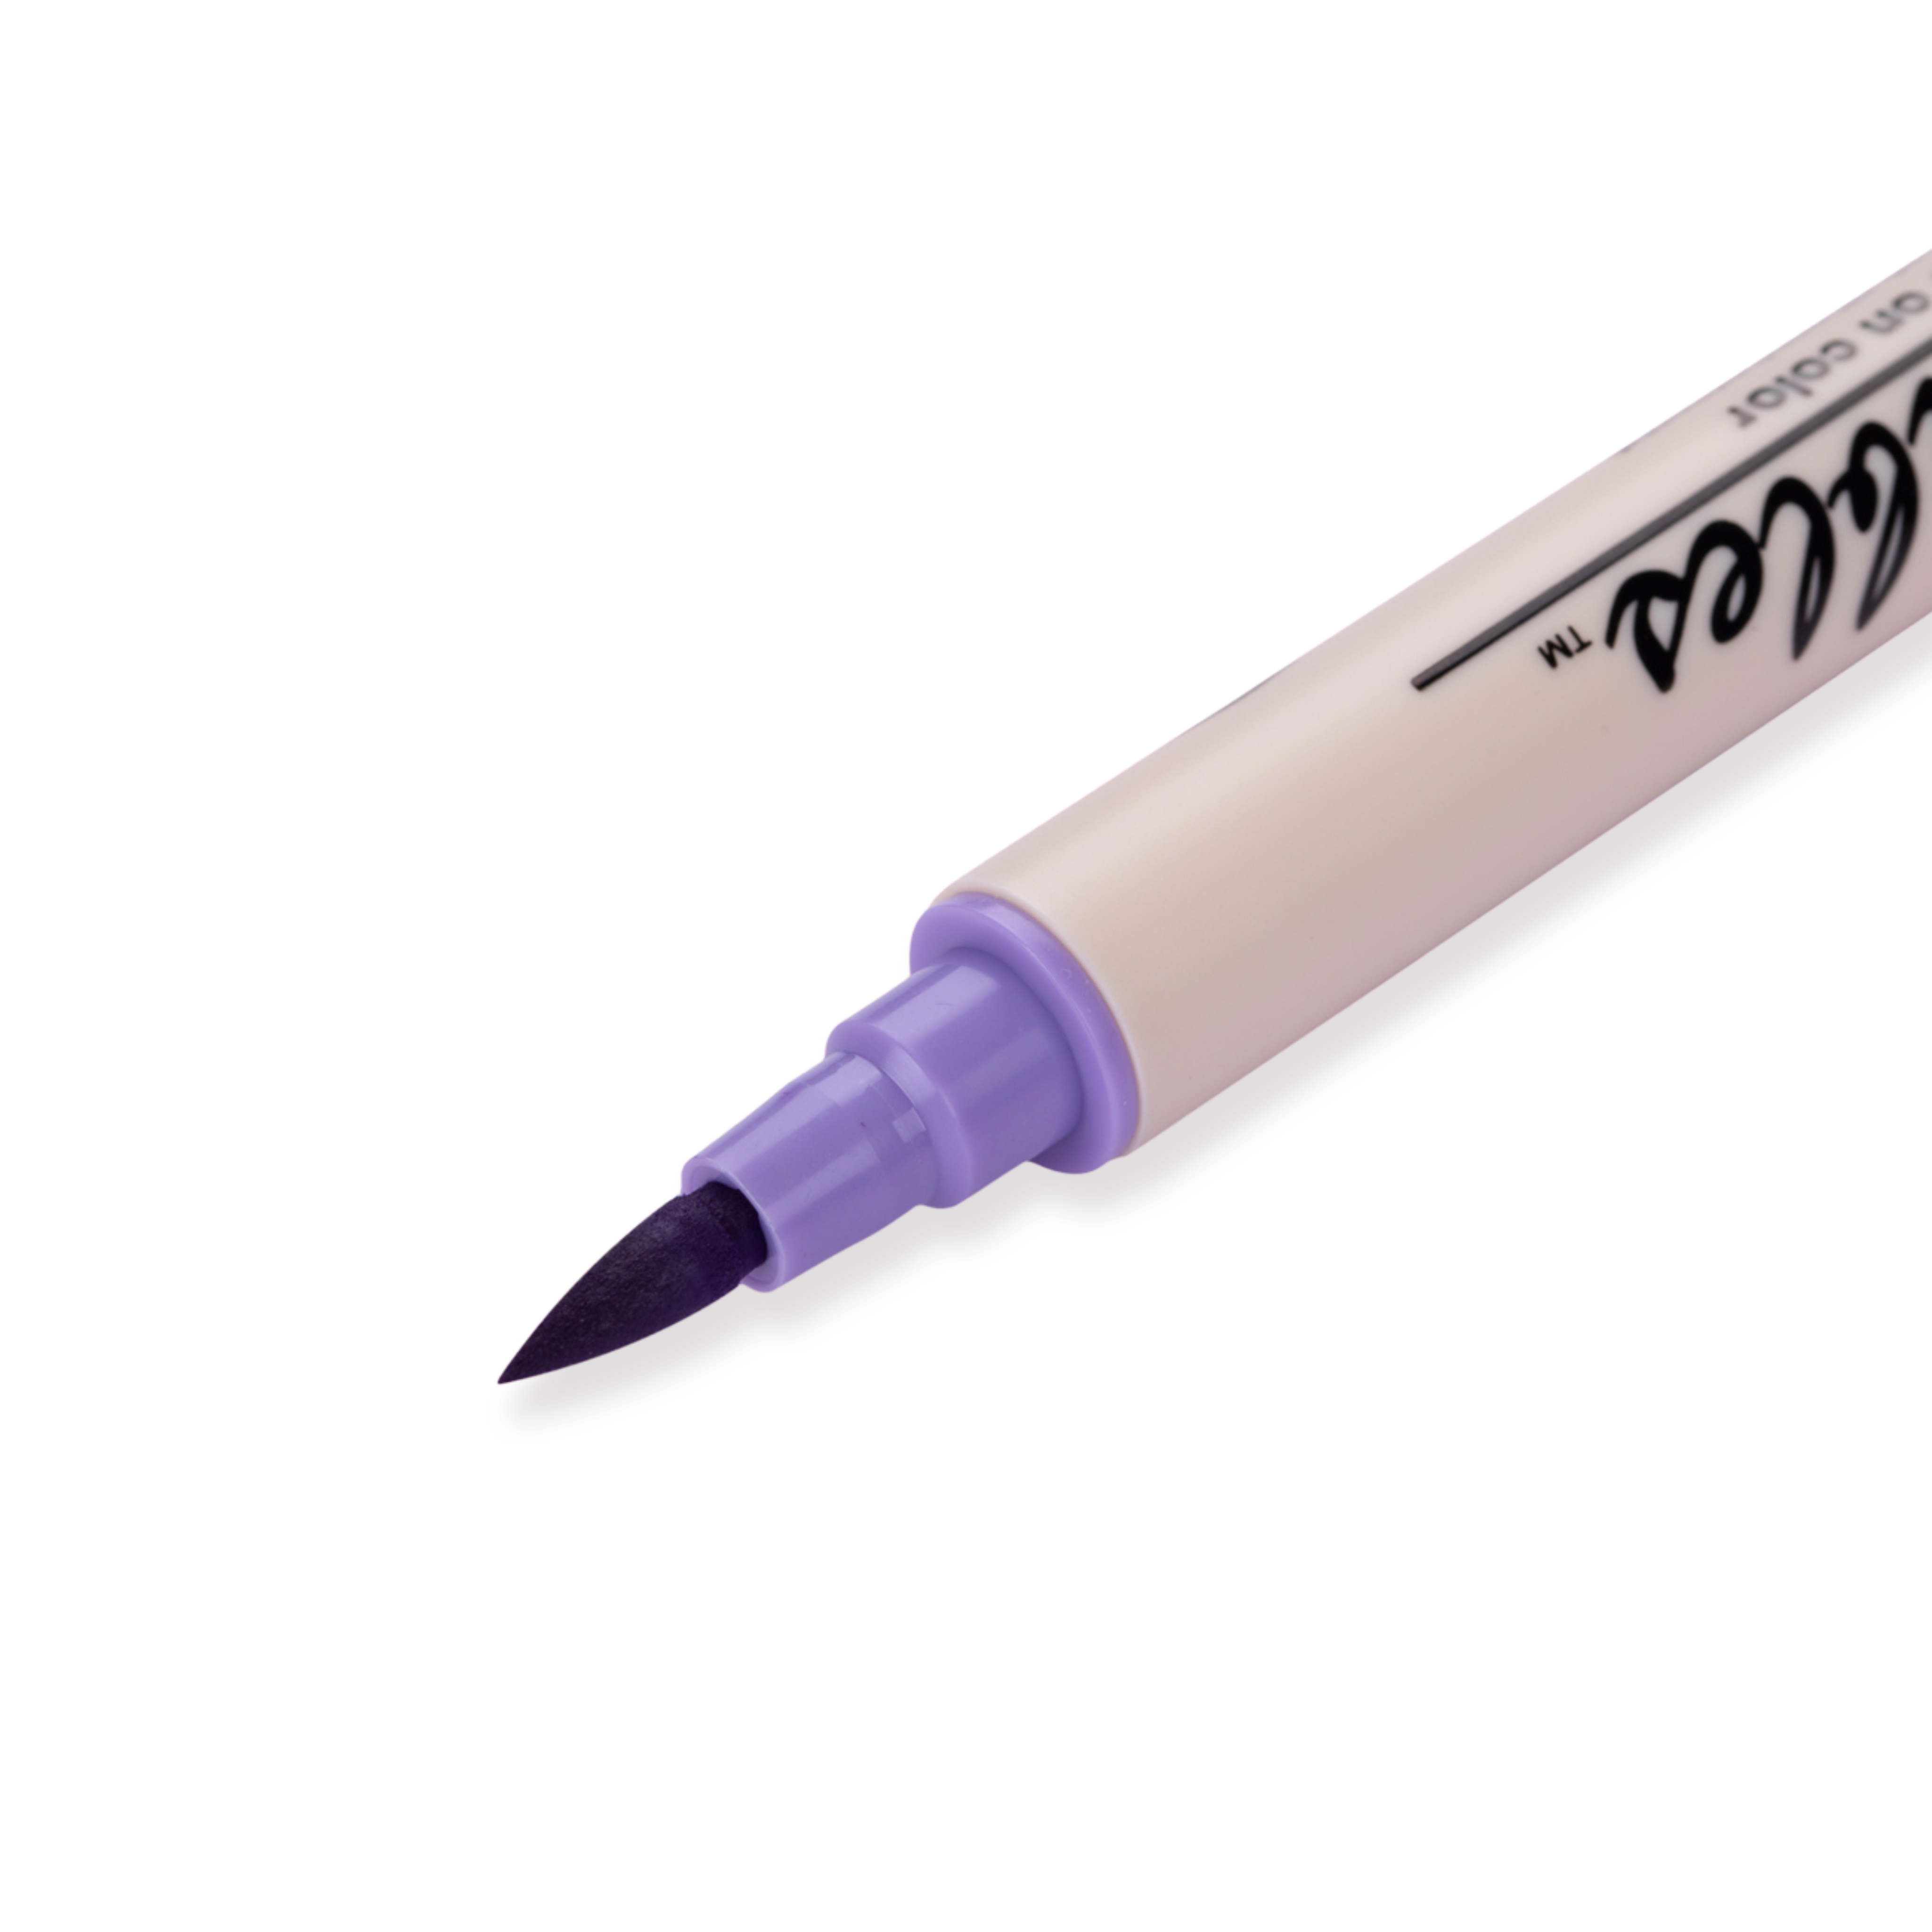 Kuretake Zig Brushables Brush Pen - Pure Violet 080